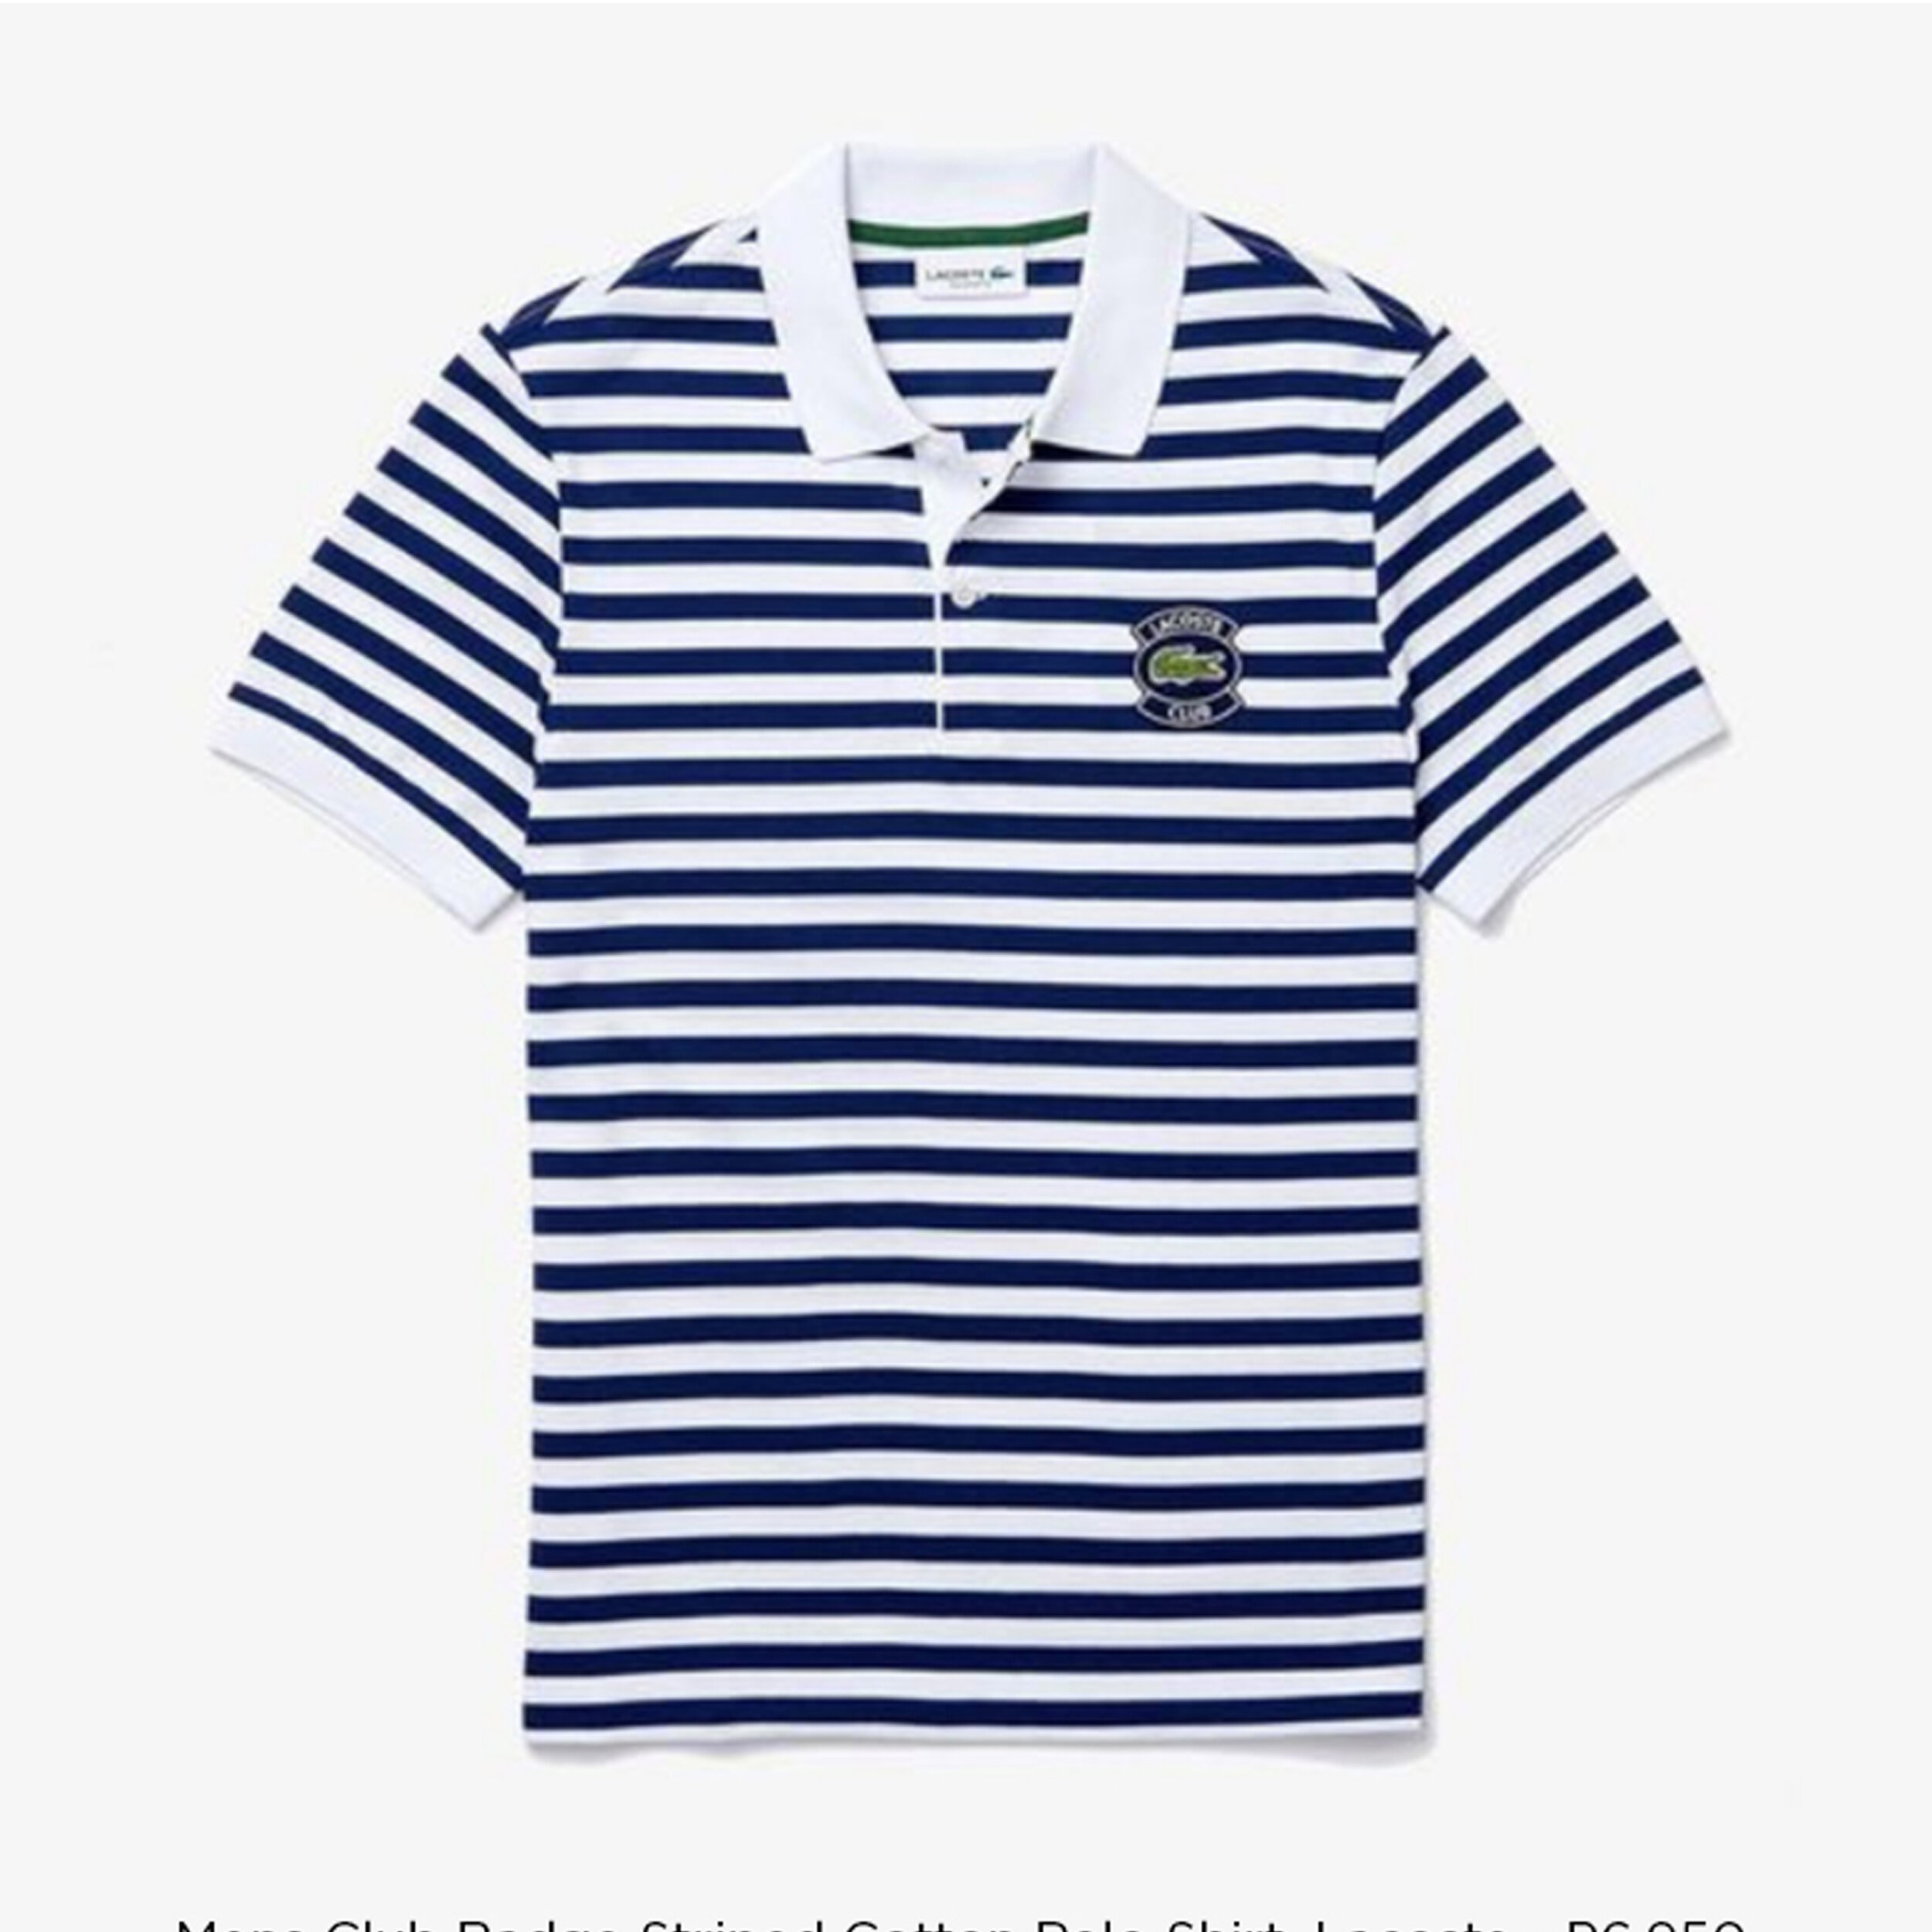  Mens Club Badge Striped Cotton Polo Shirt, Lacoste P6,950 